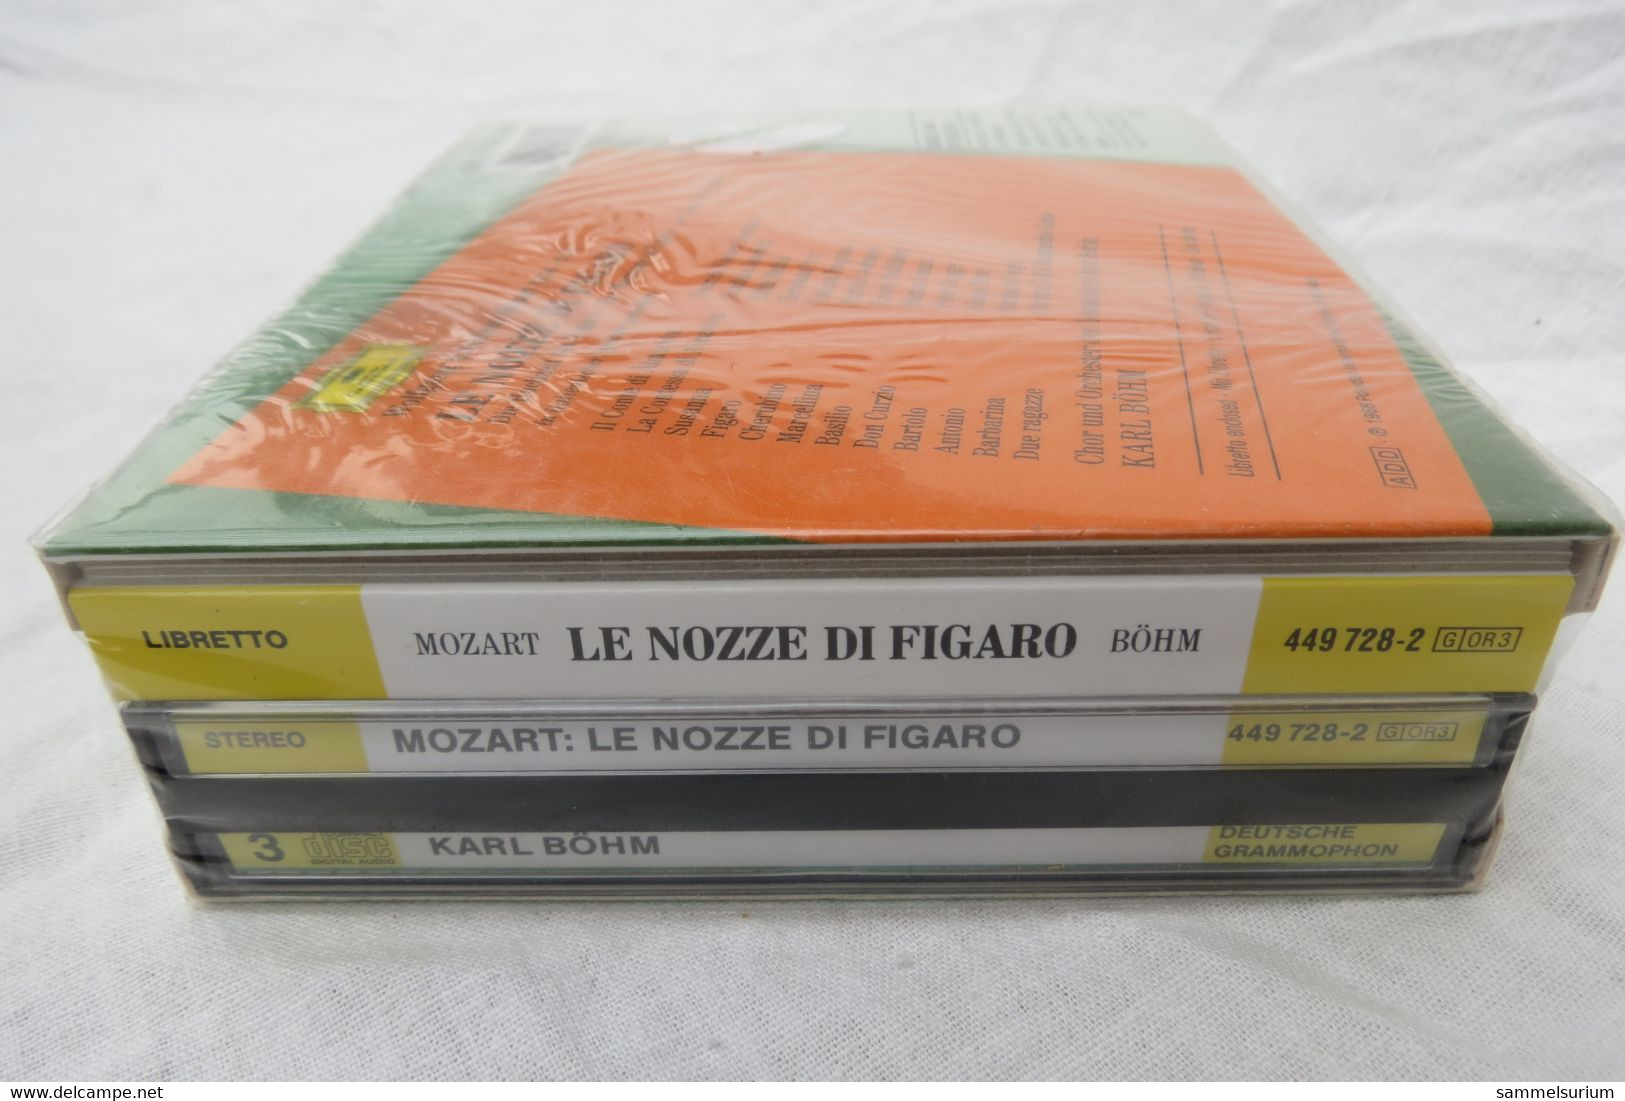 3 CDs "Wolfgang Amadeus Mozart" Le Nozze Di Figaro, Karl Böhm (noch Original Eingeschweißt) - Opera / Operette